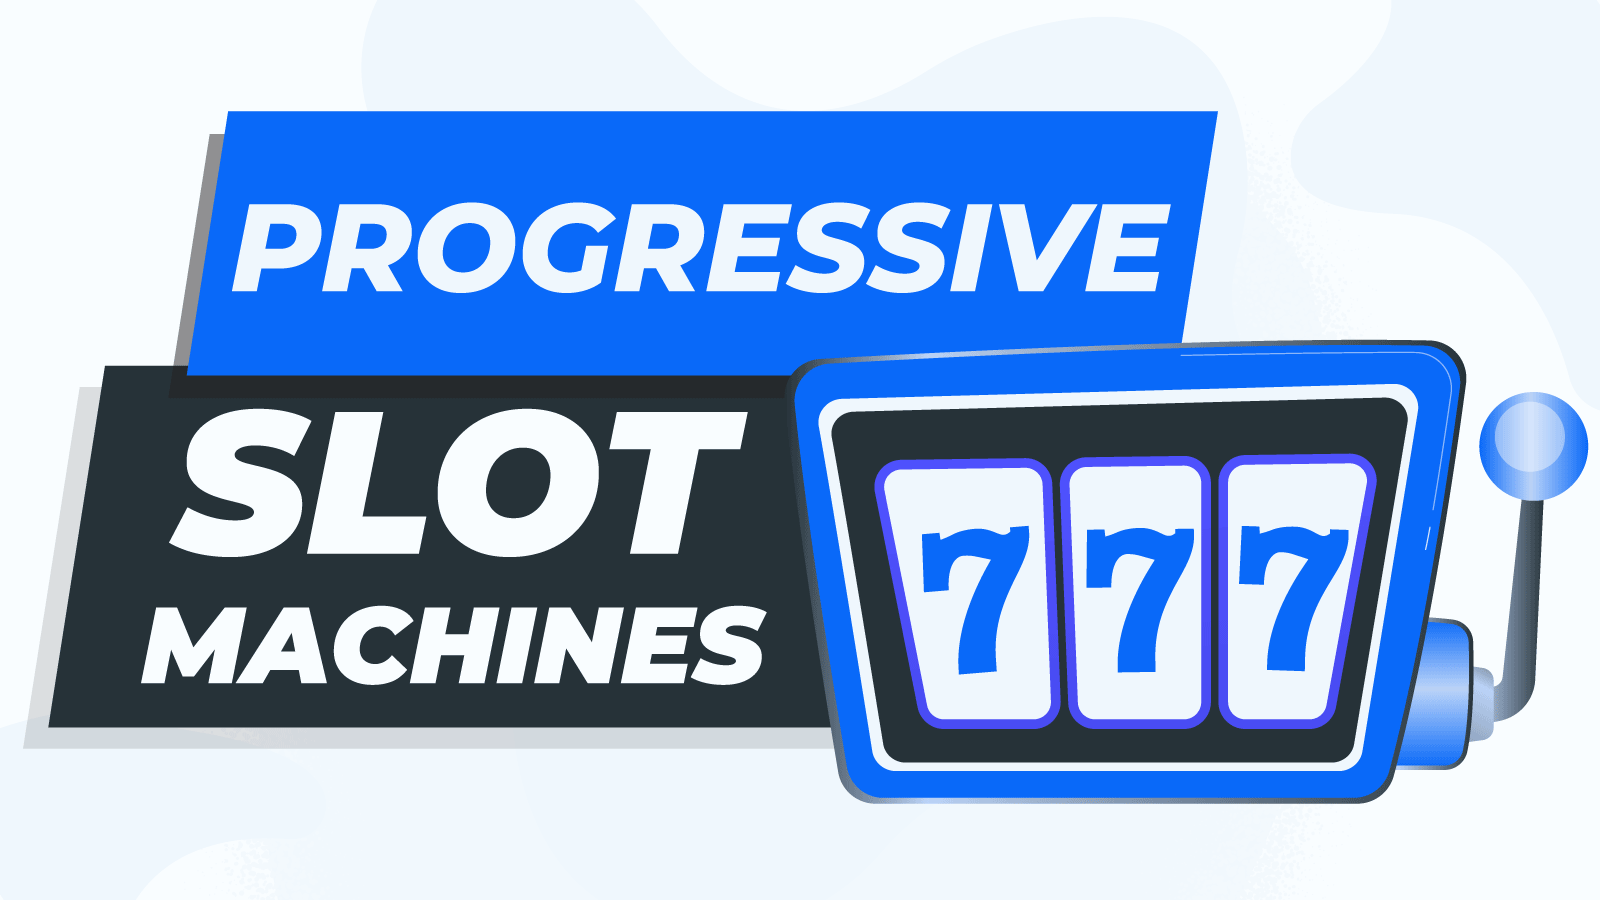 Introduction to progressive slot machines